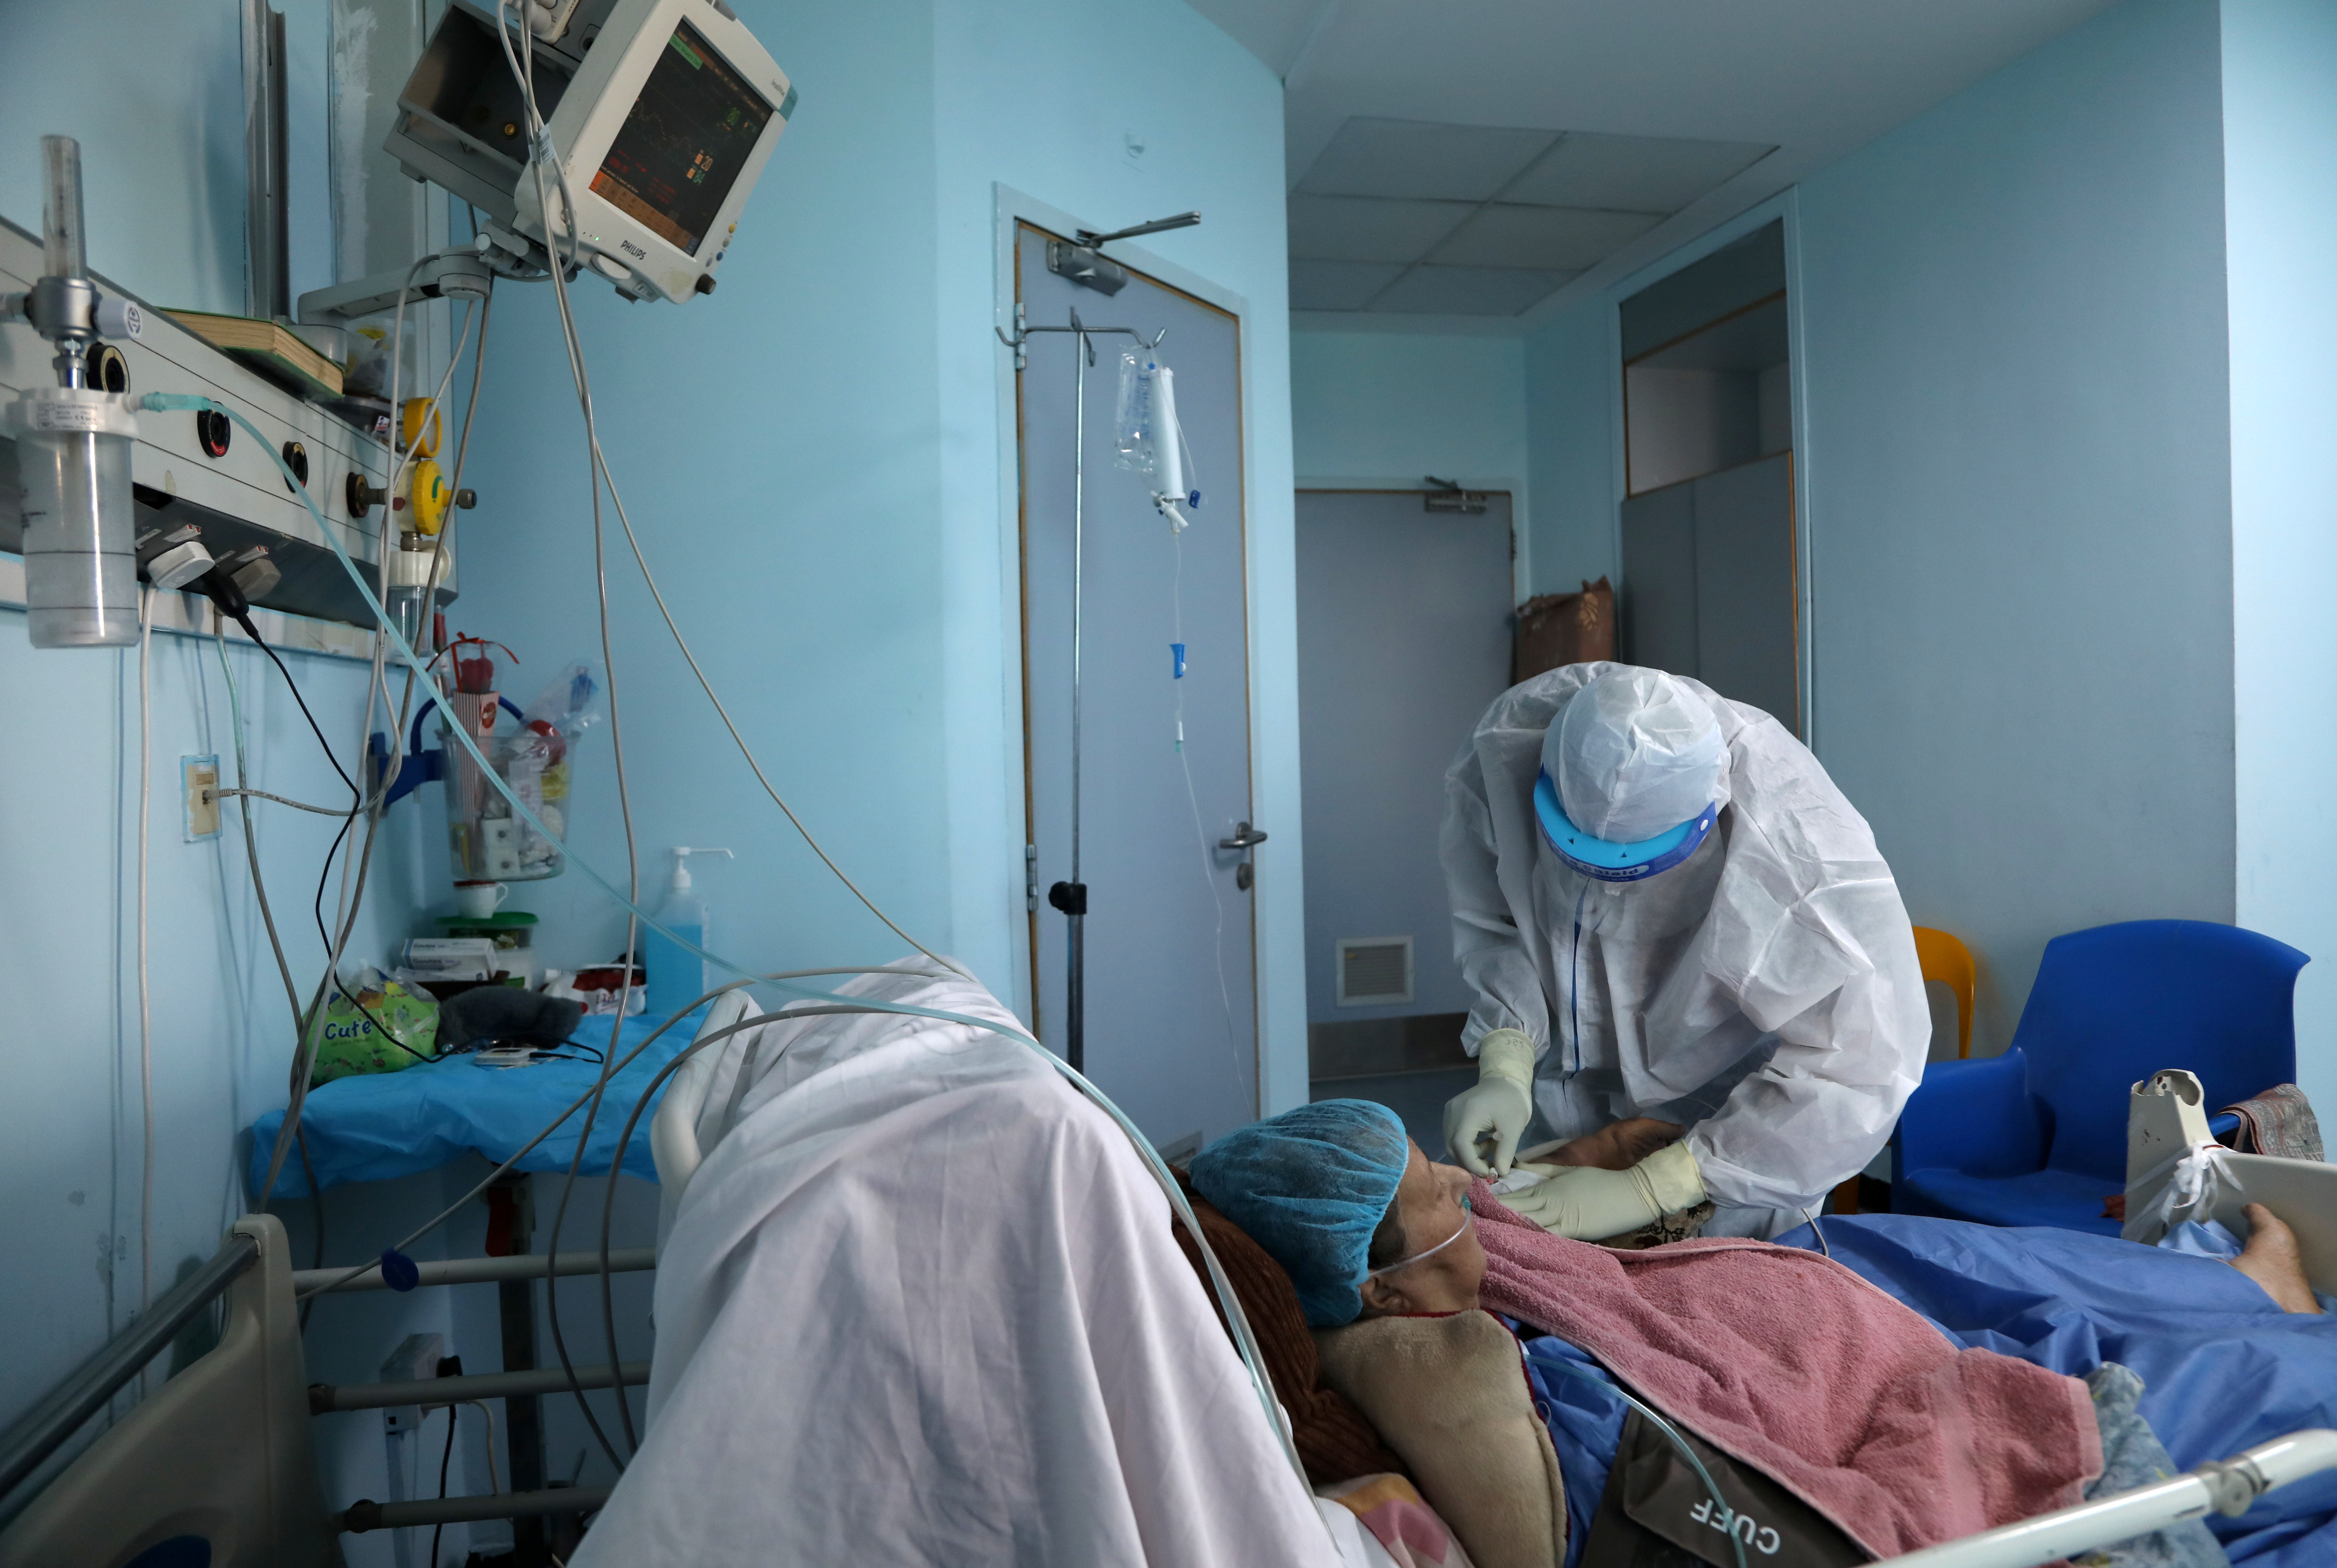 A nurse assists a patient suffering from coronavirus disease (COVID-19), in an intensive care unit inside a hospital in Amman, Jordan June 1, 2021. Picture taken June 1, 2021. REUTERS/Alaa Al Sukhni